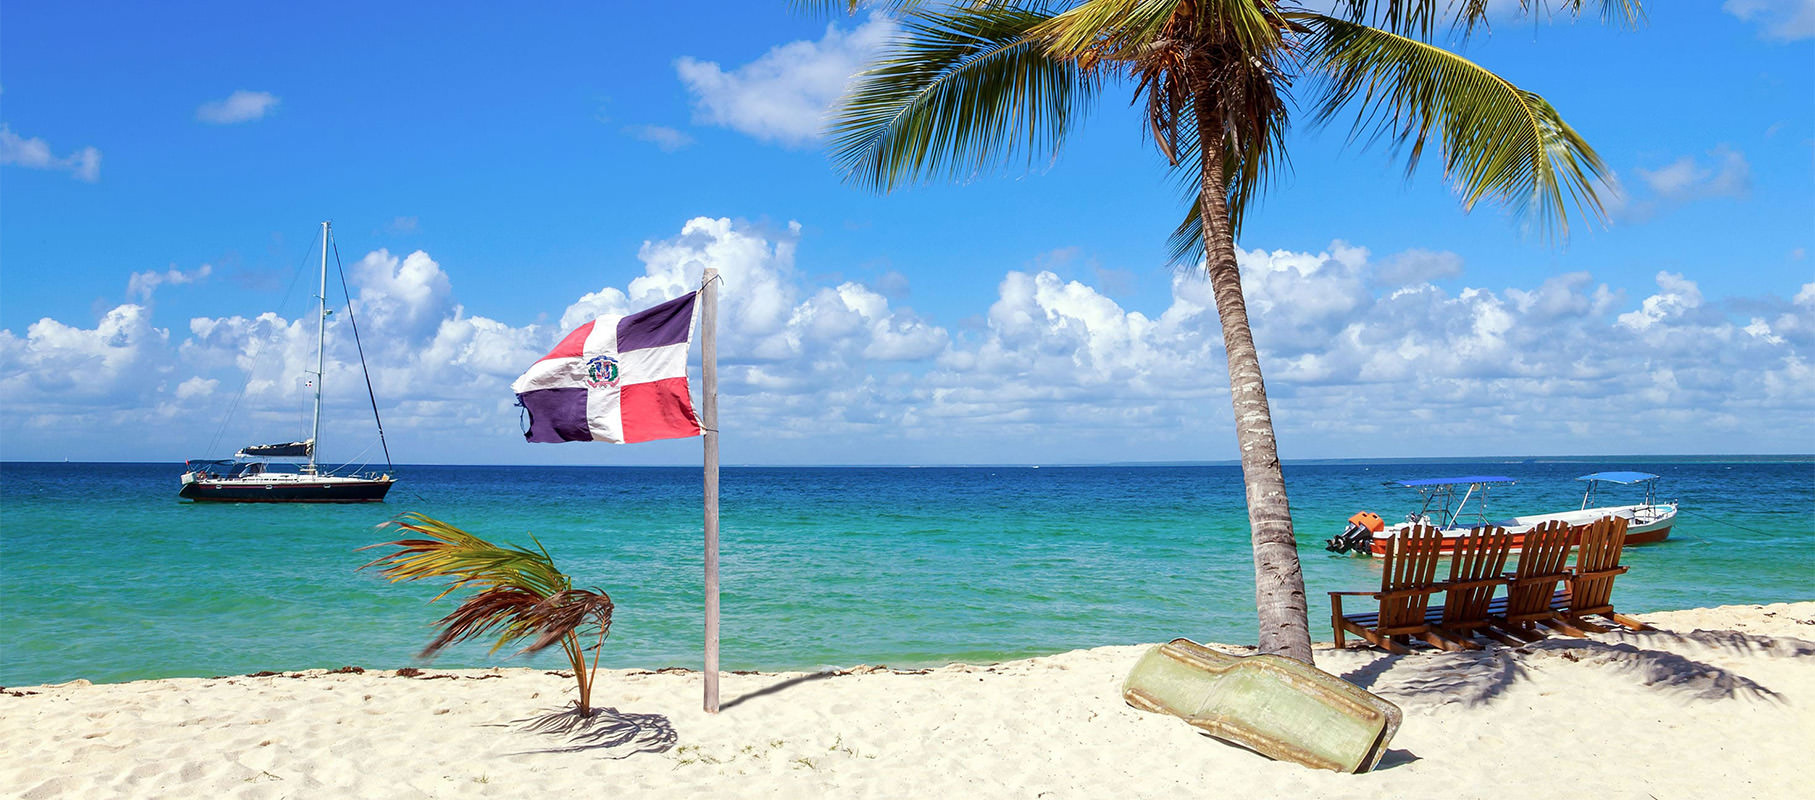 Hoteles en Punta Cana | República Dominicana | Palladium Hotel Group